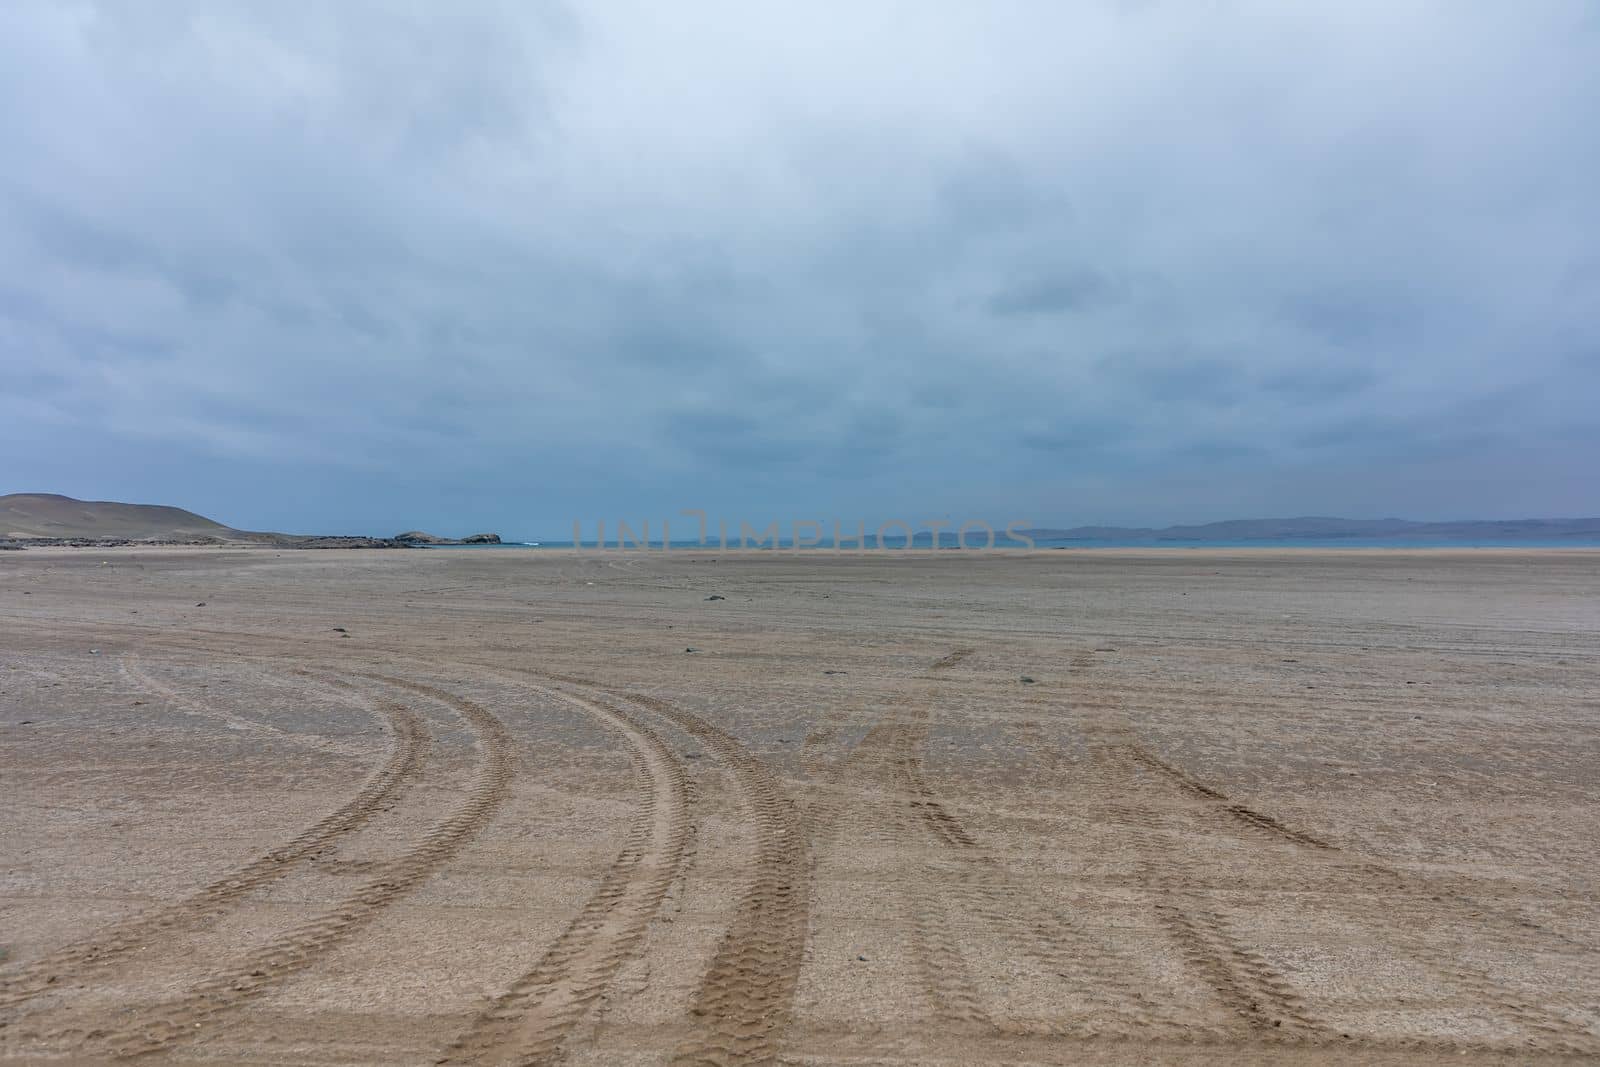 sandy seashore with car tire tracks. High quality photo